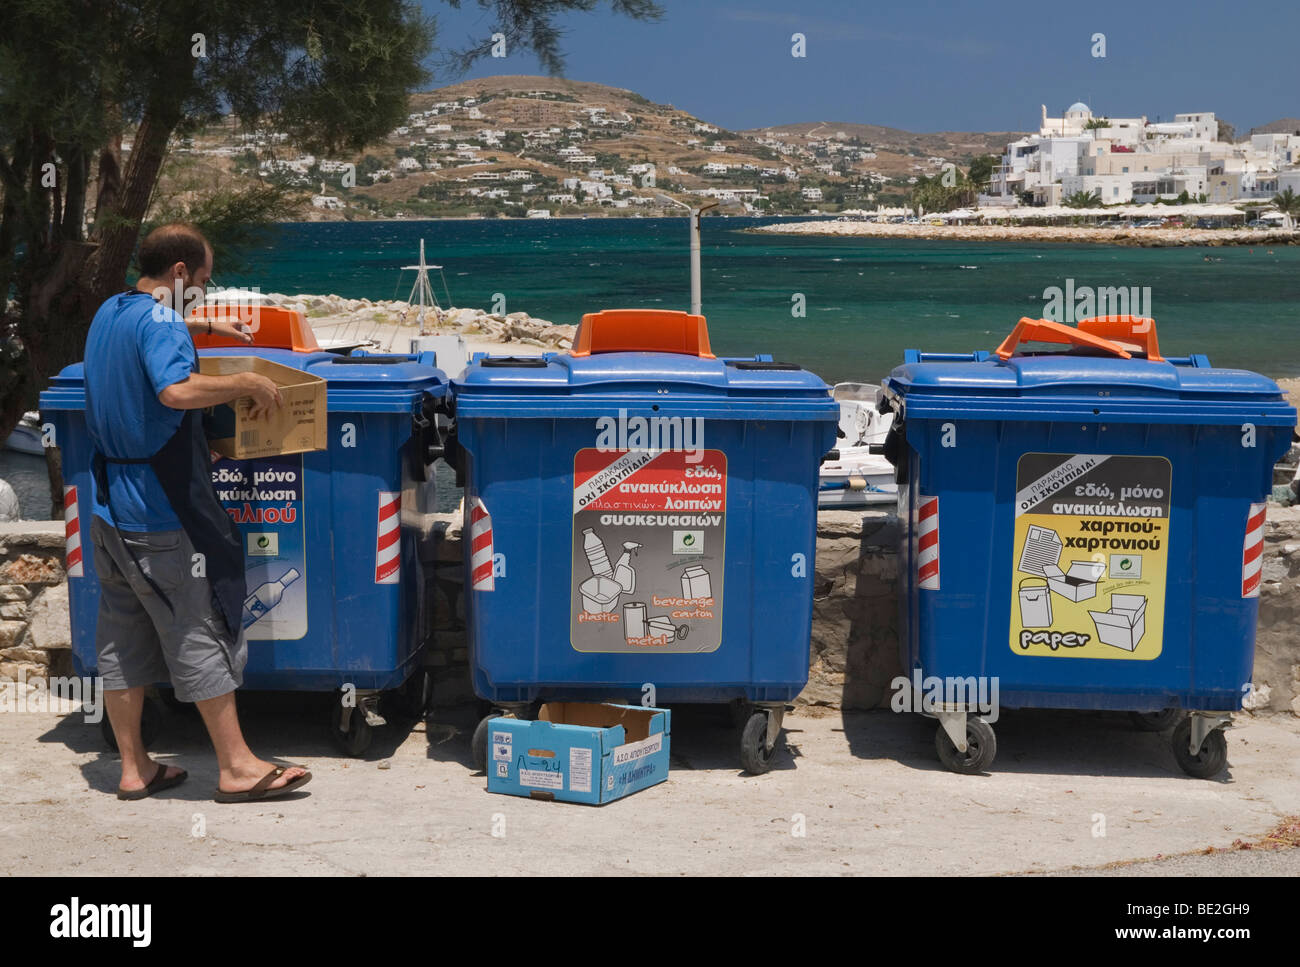 Man sorting rubbish for recycling bins in Greece Stock Photo